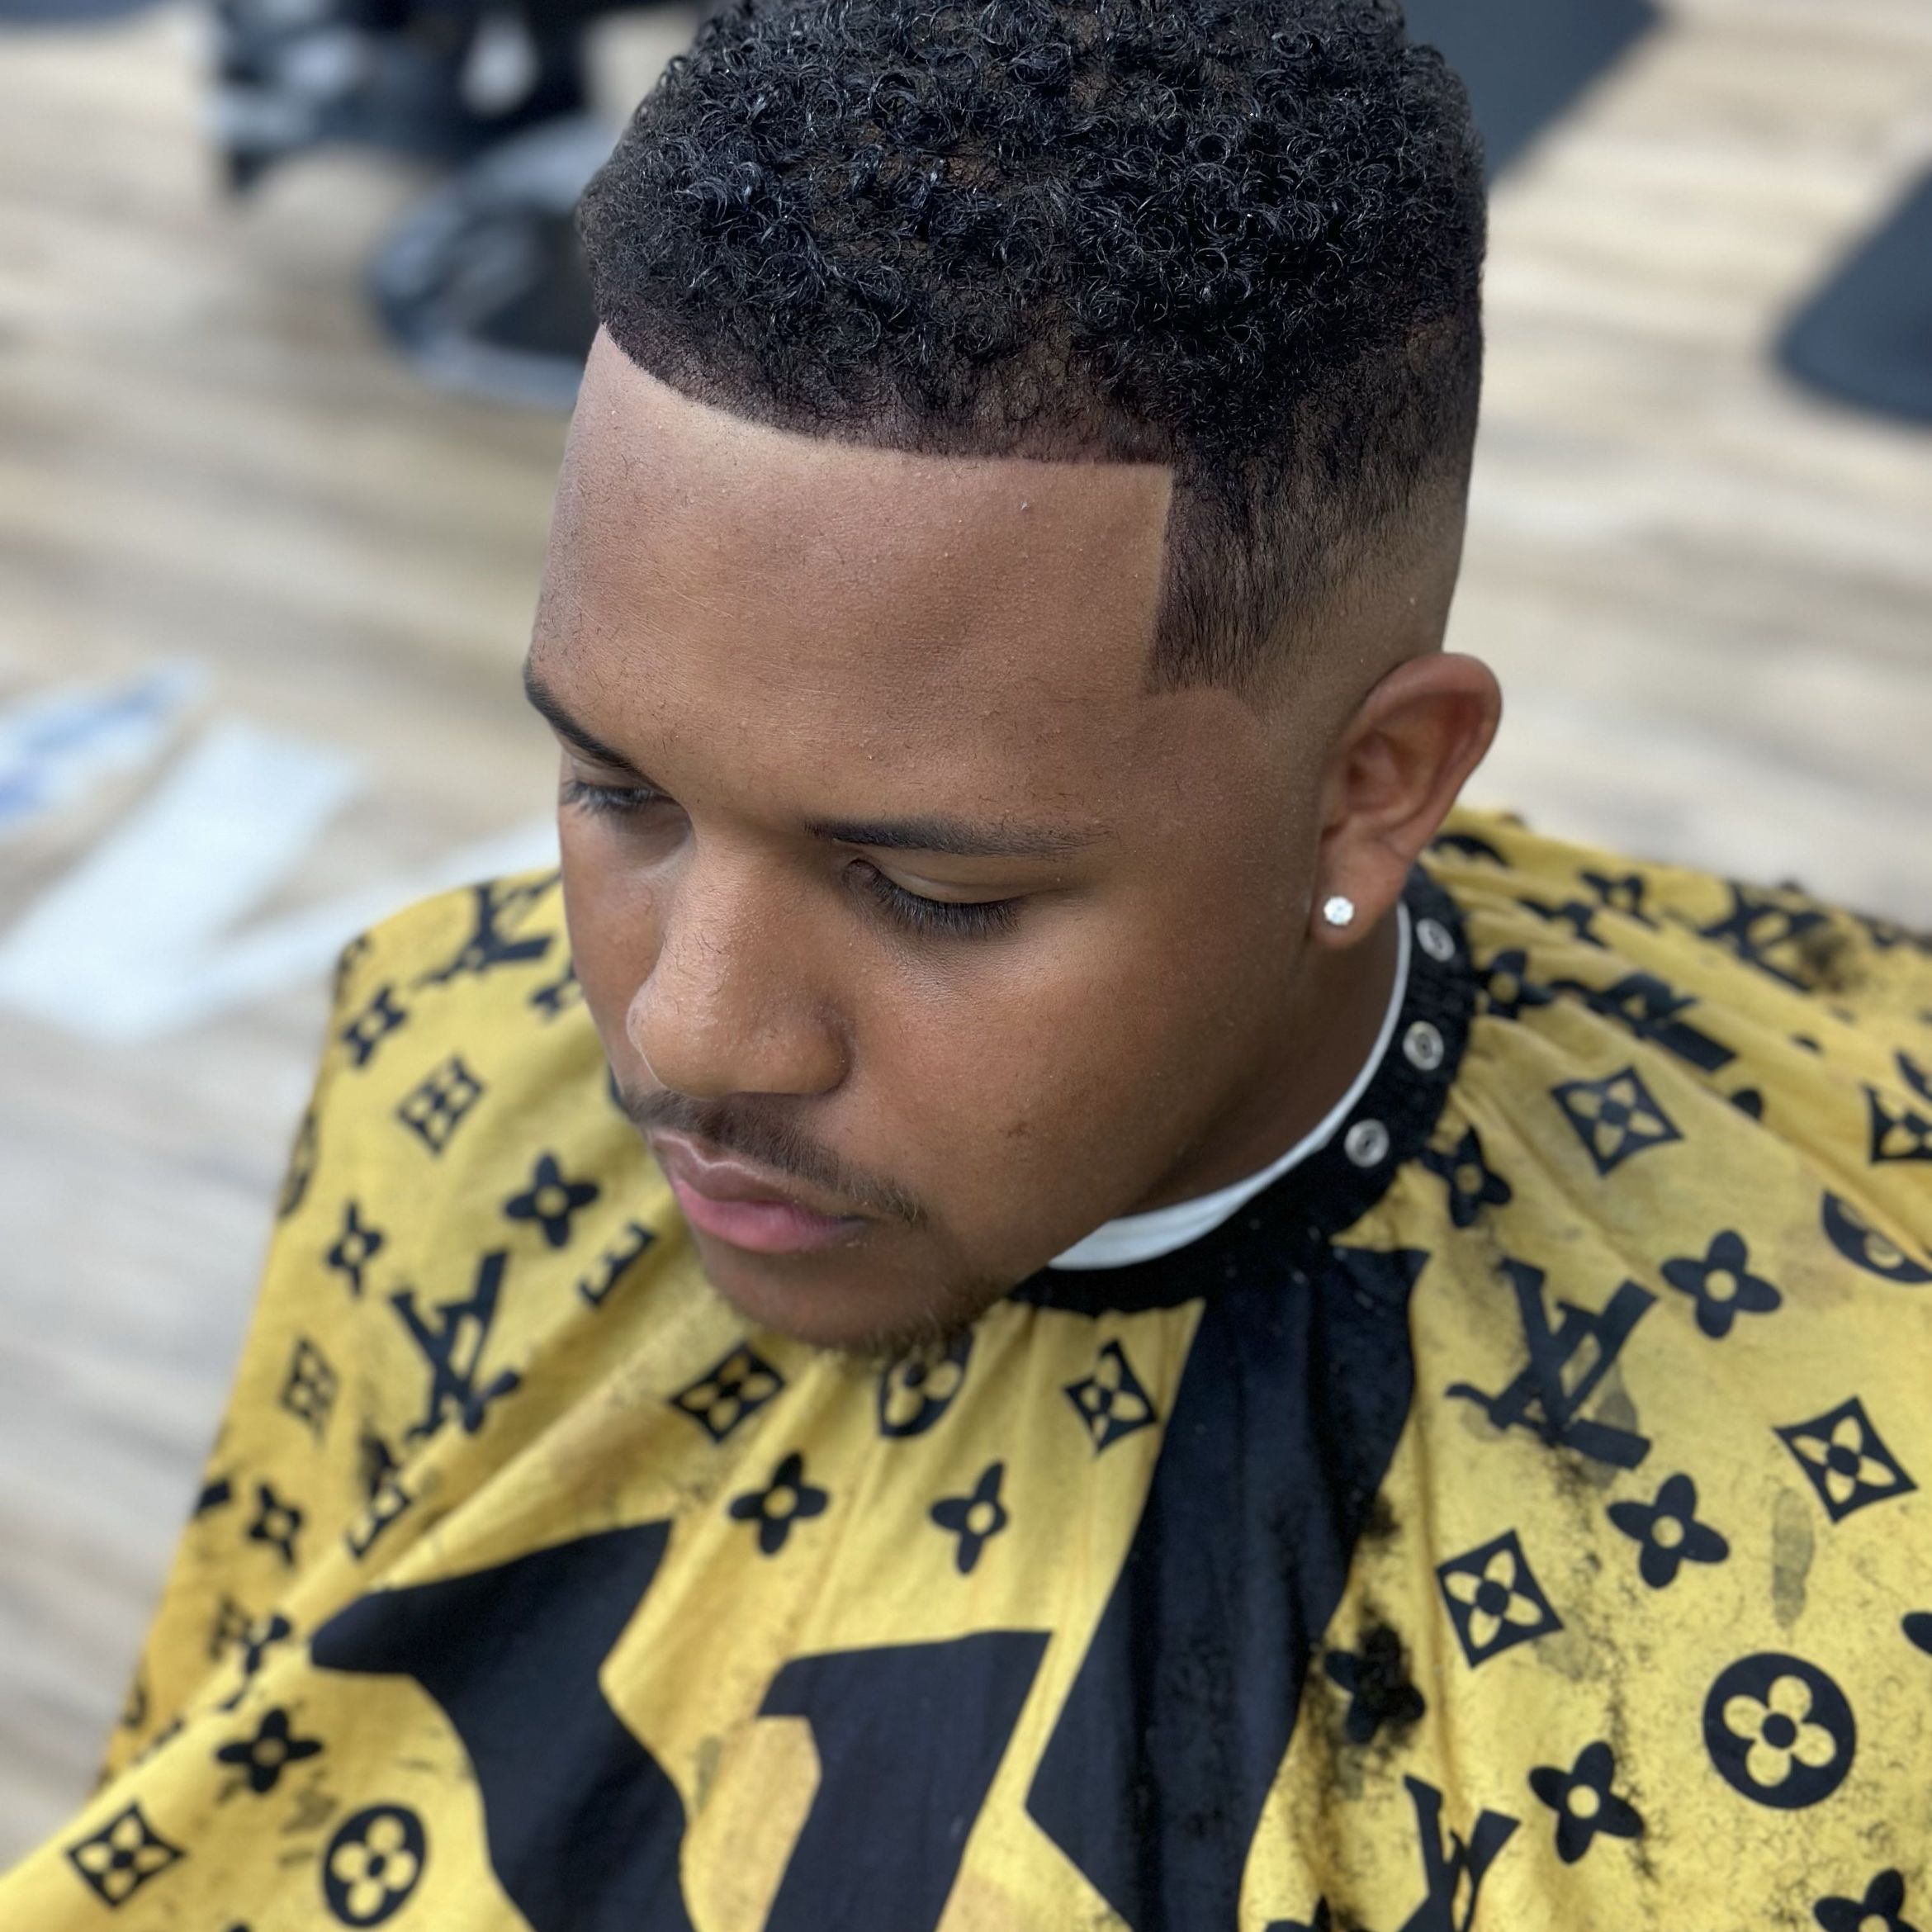 Men’s enhanced haircut 13-17 portfolio